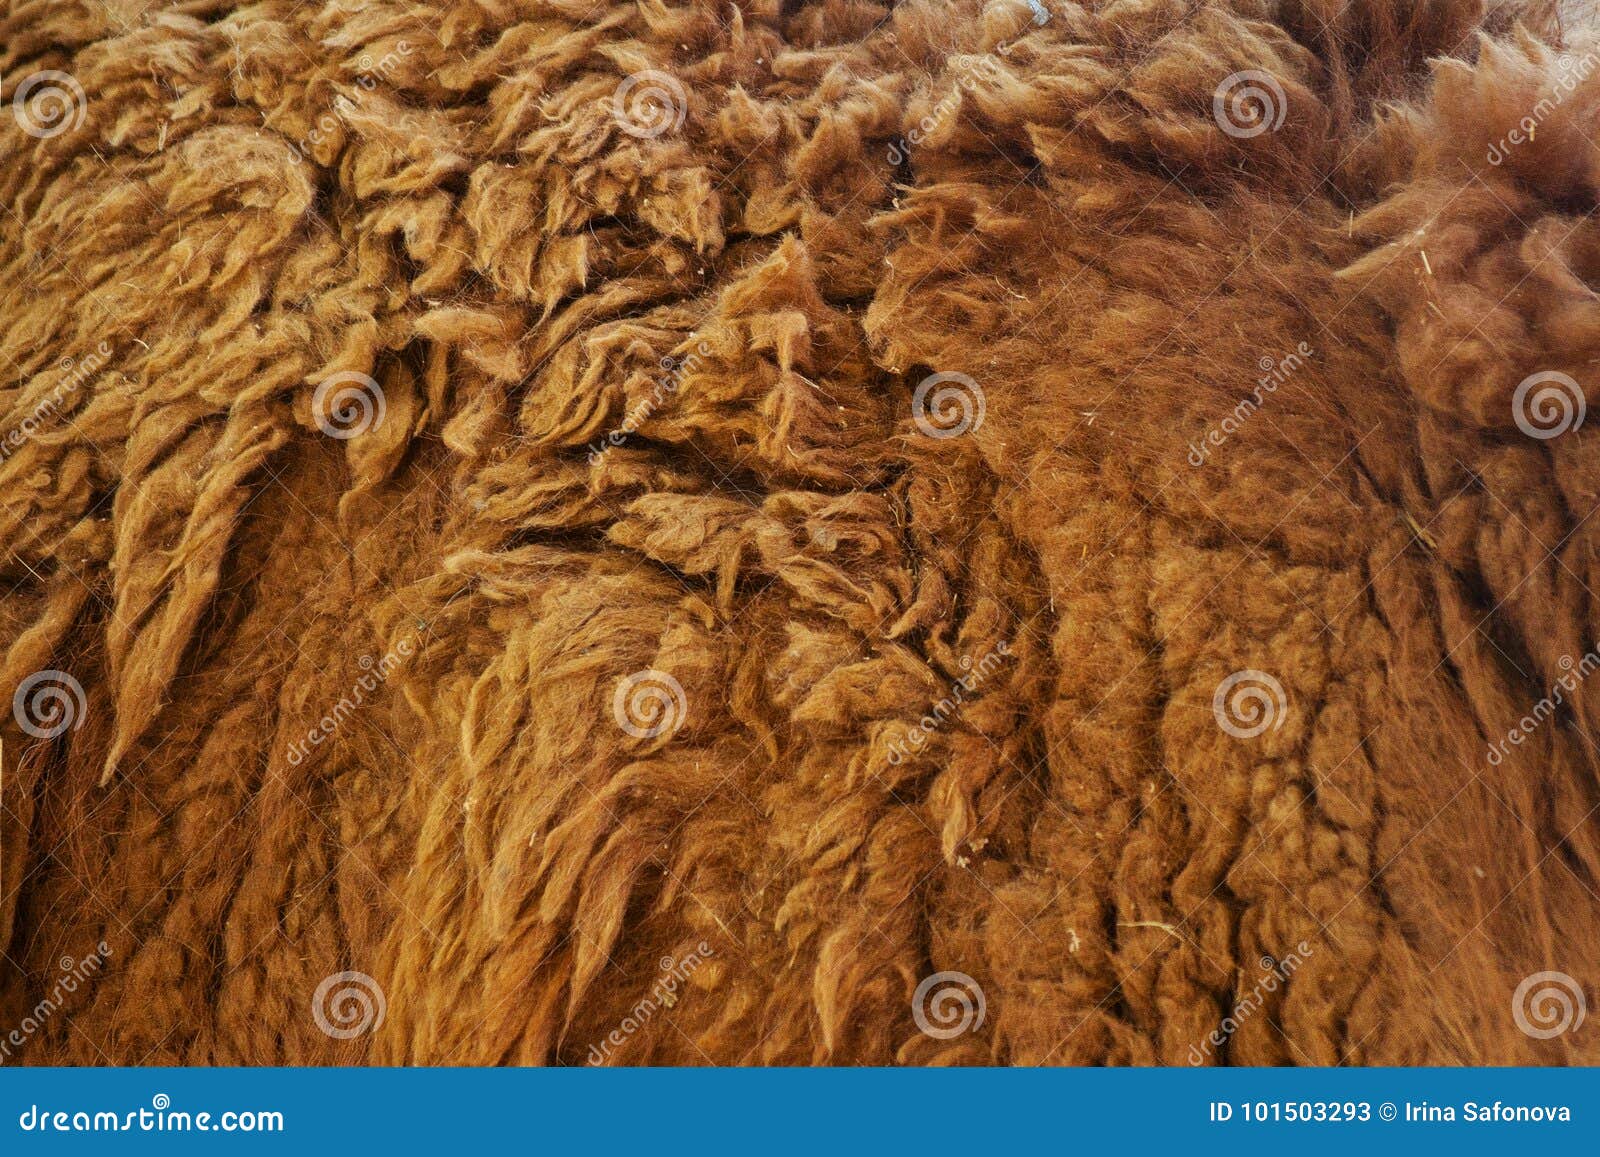 Texture of a Wool Lama Stock Image - Image glama, clothing: 101503293